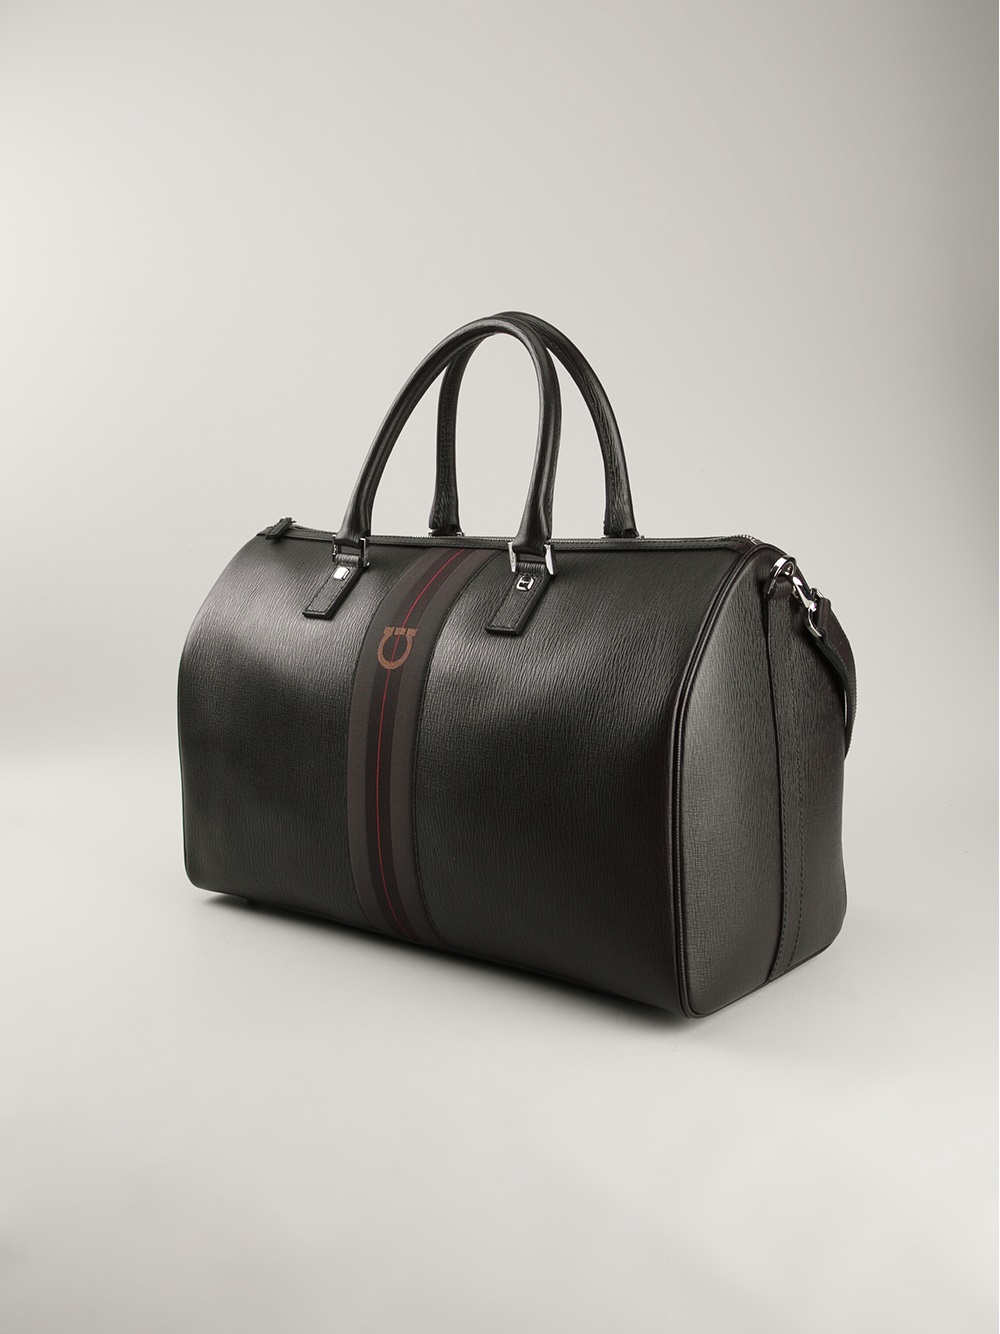 Ferragamo Duffle Bag in Black for Men - Lyst